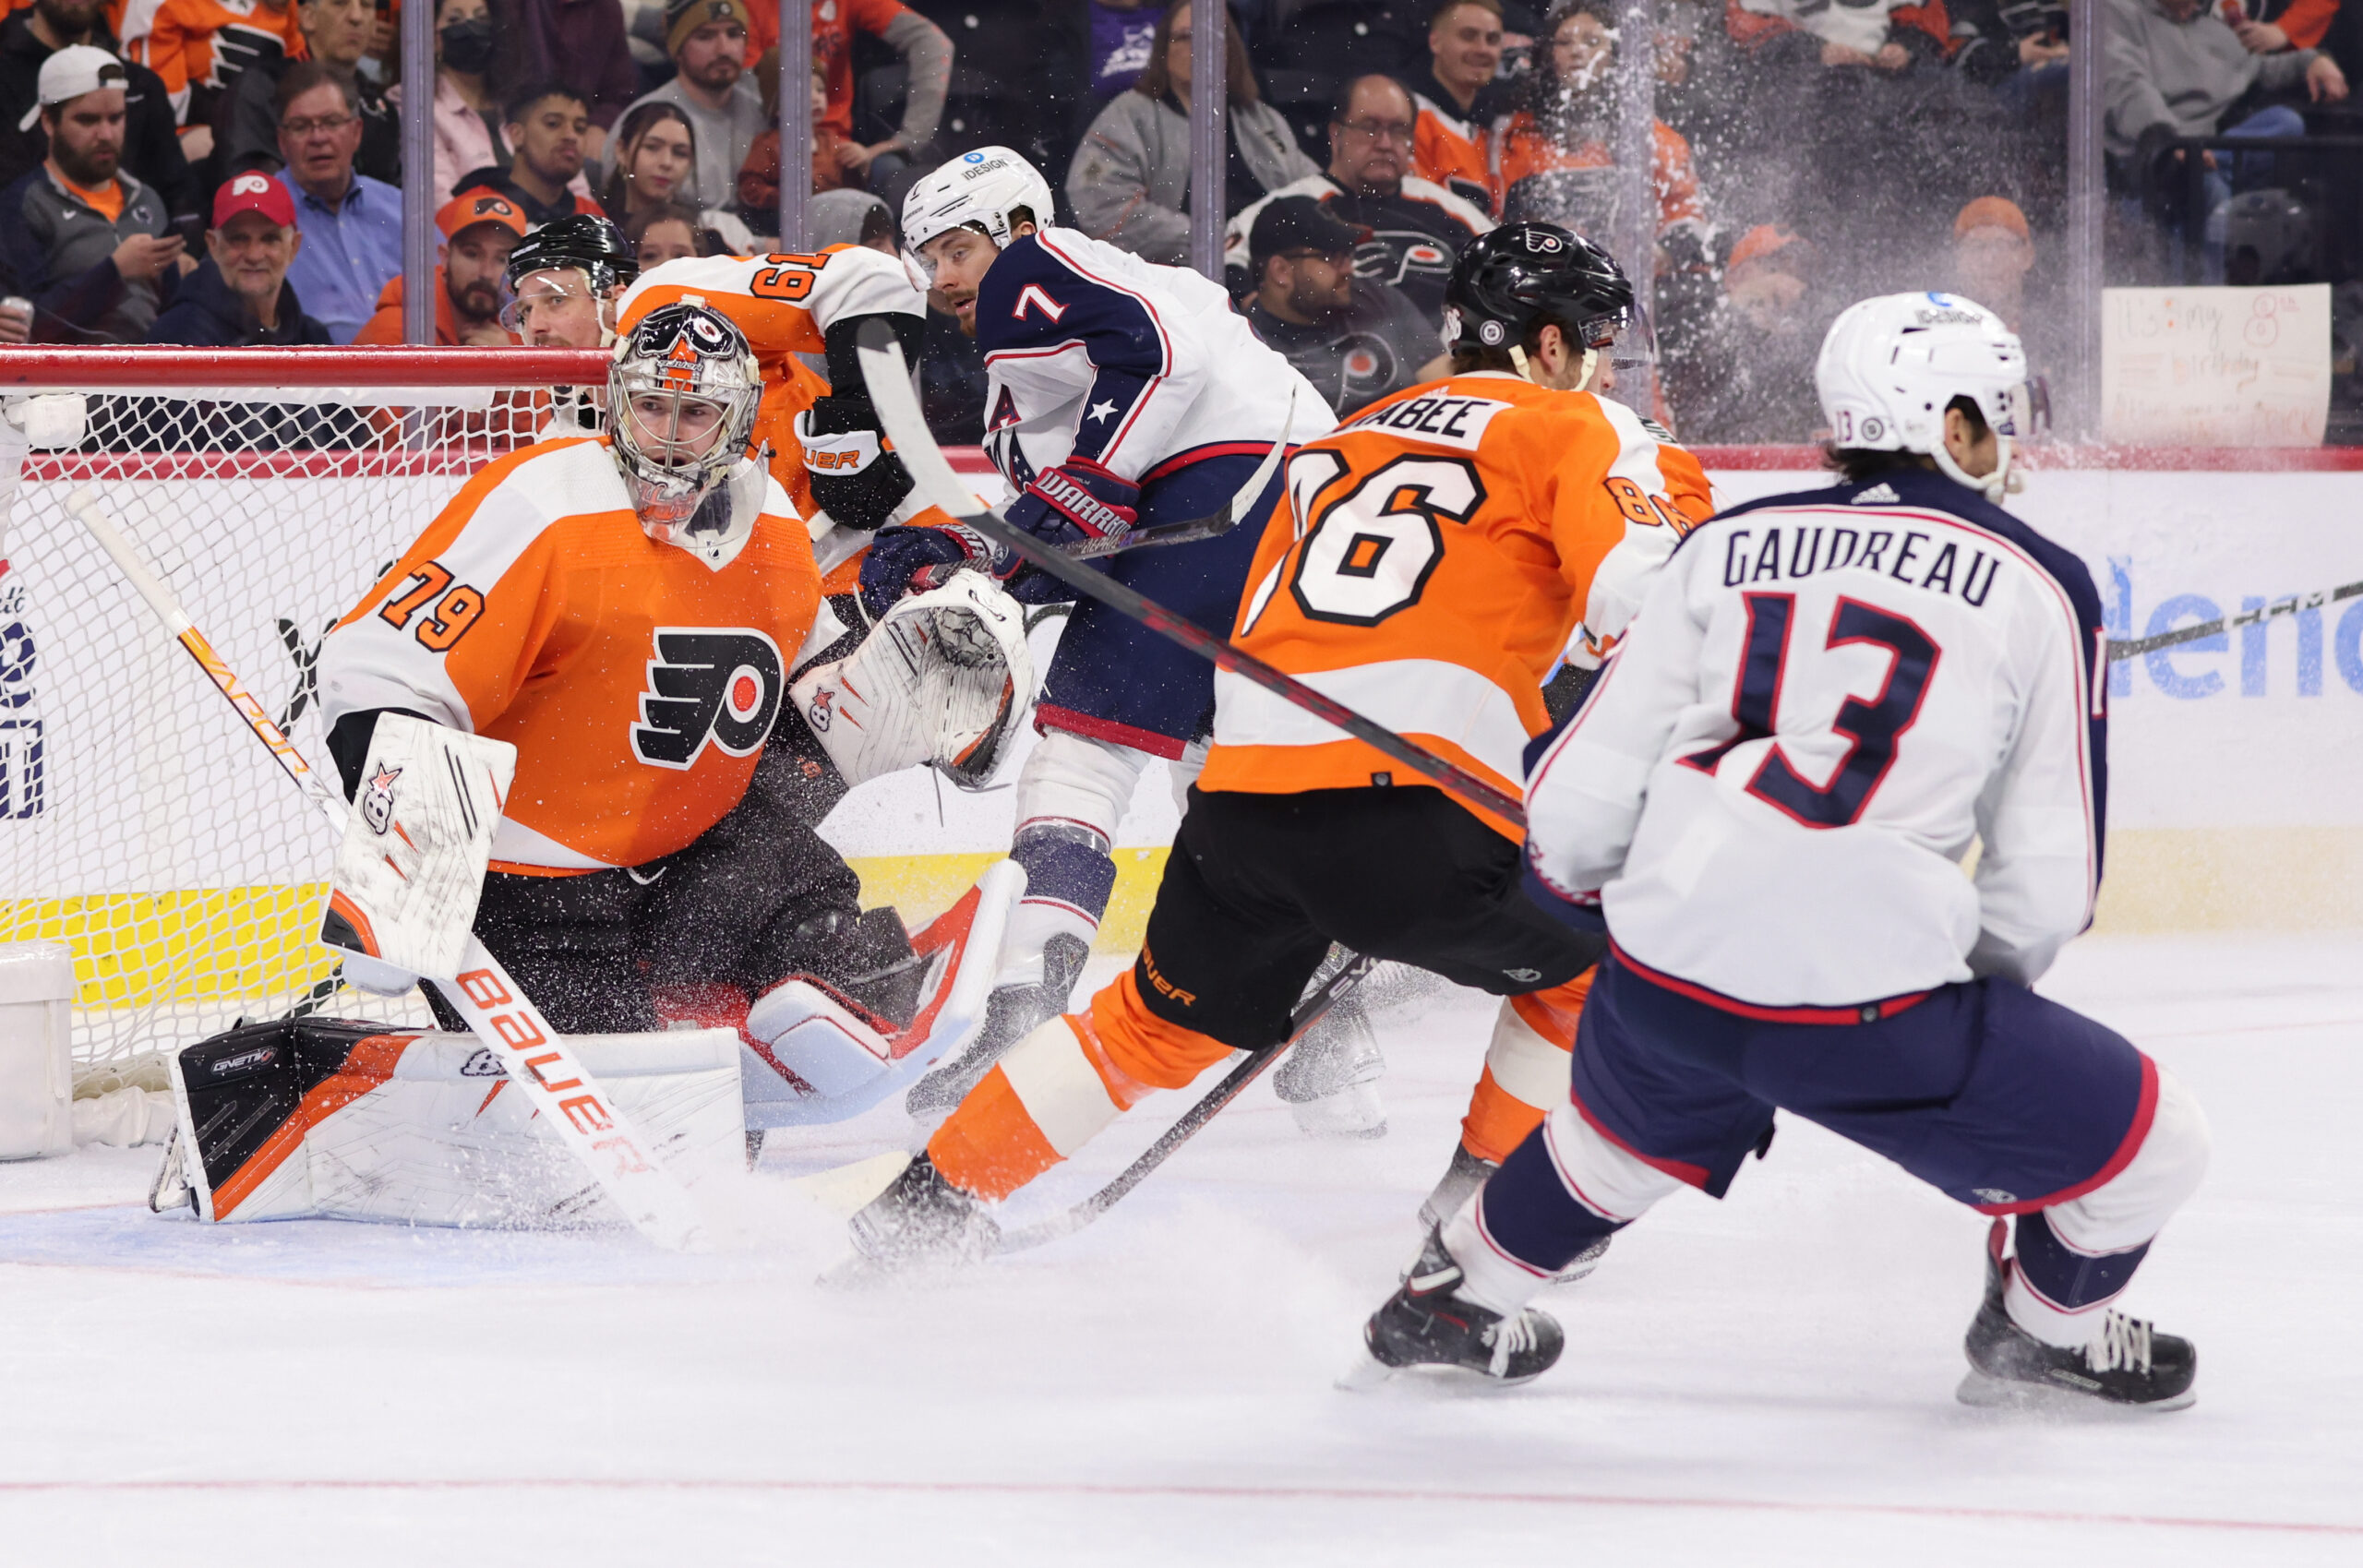 Philadelphia Flyers unveil 2023-24 preseason schedule